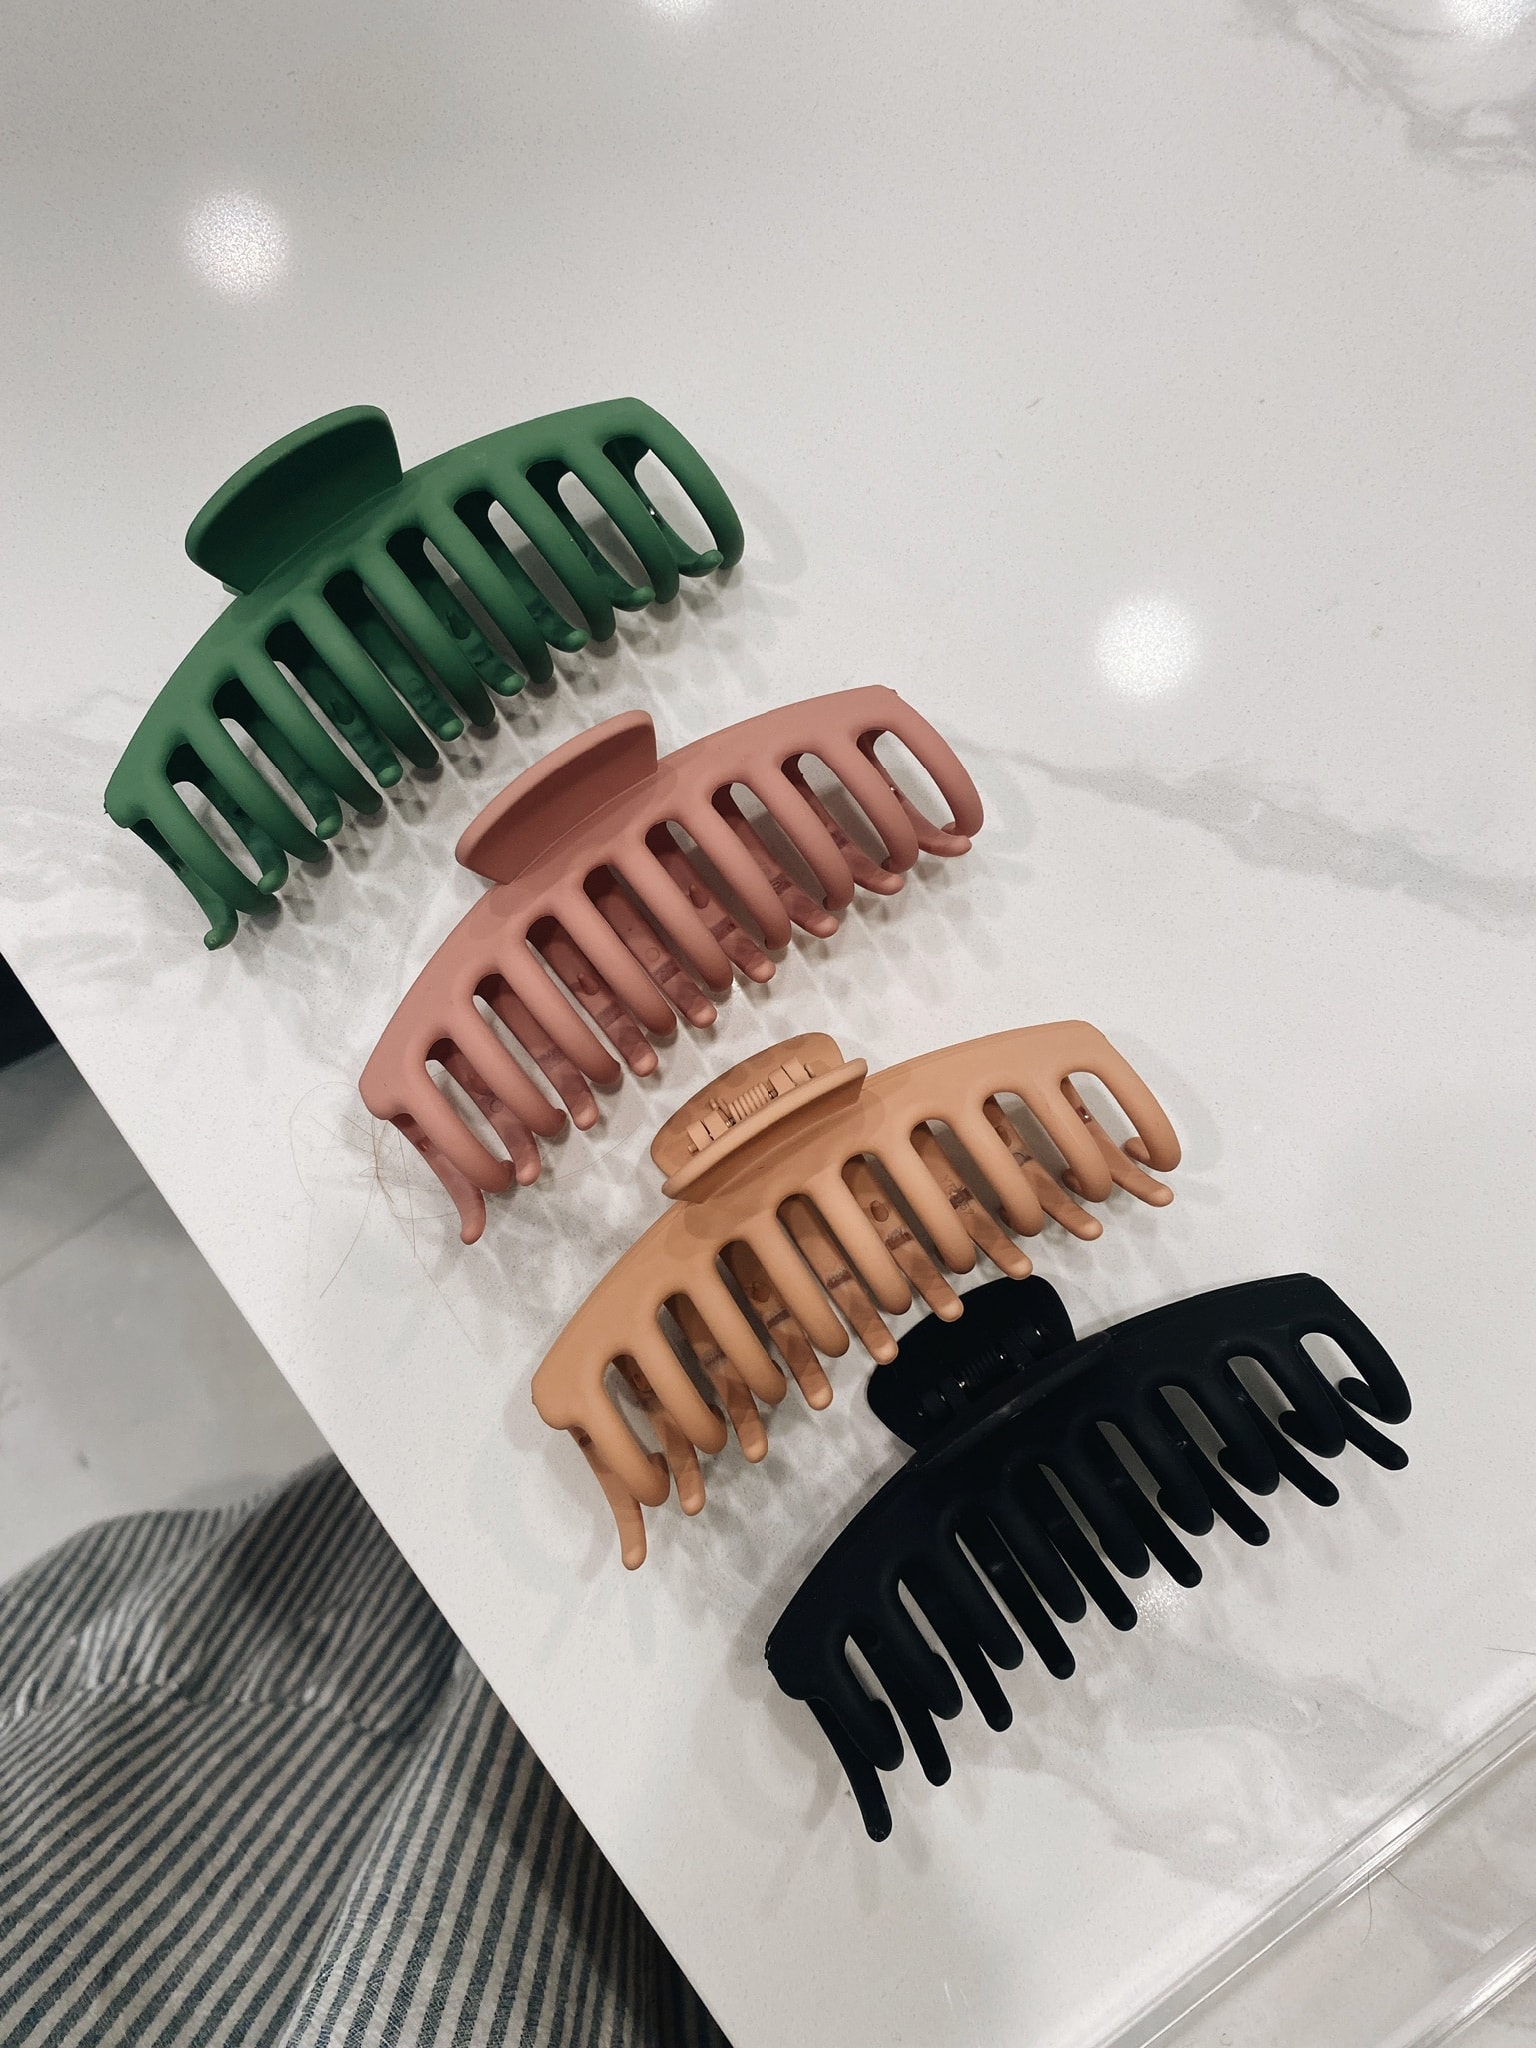 Brighton Butler amazon best sellers big hair clip in green, pink orange and black